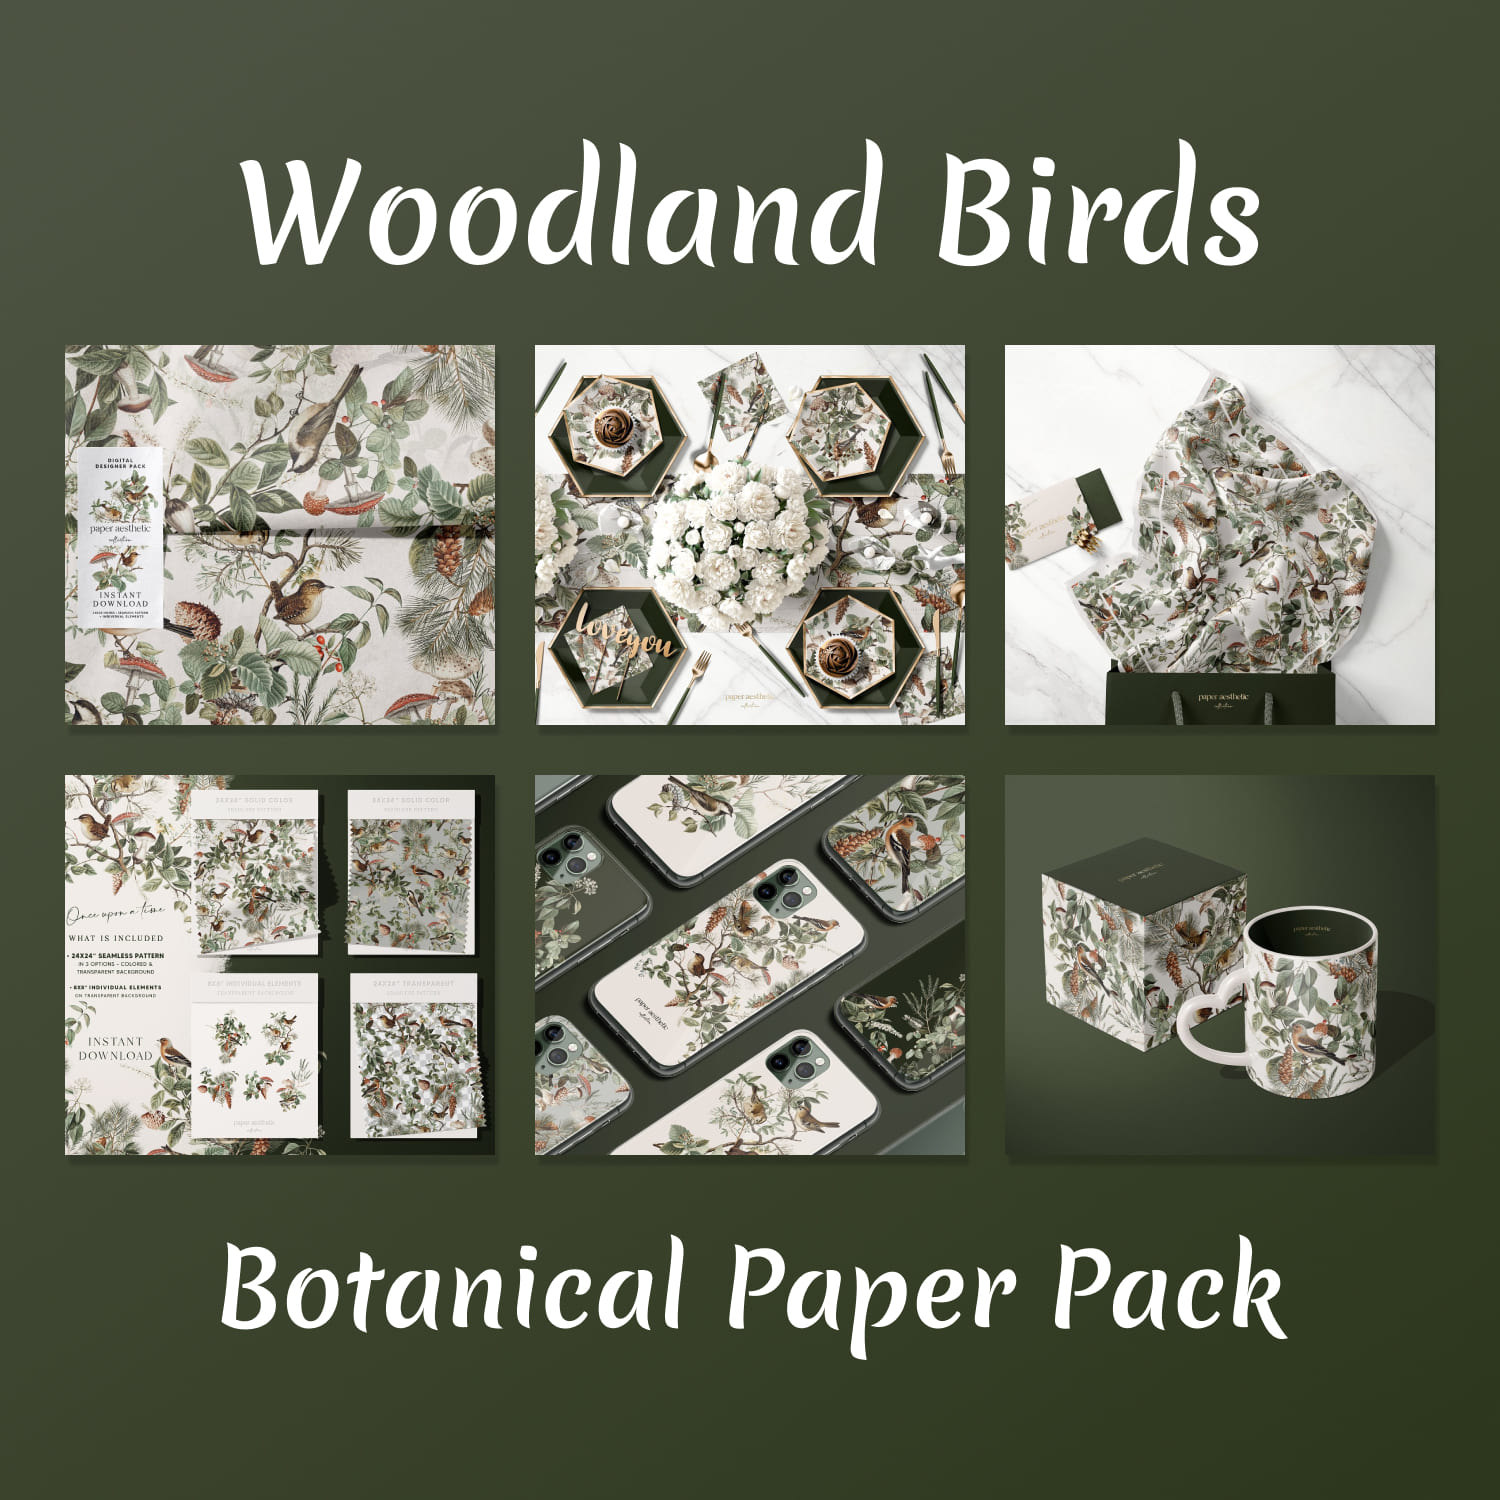 Woodland Birds Botanical Paper Pack 01.